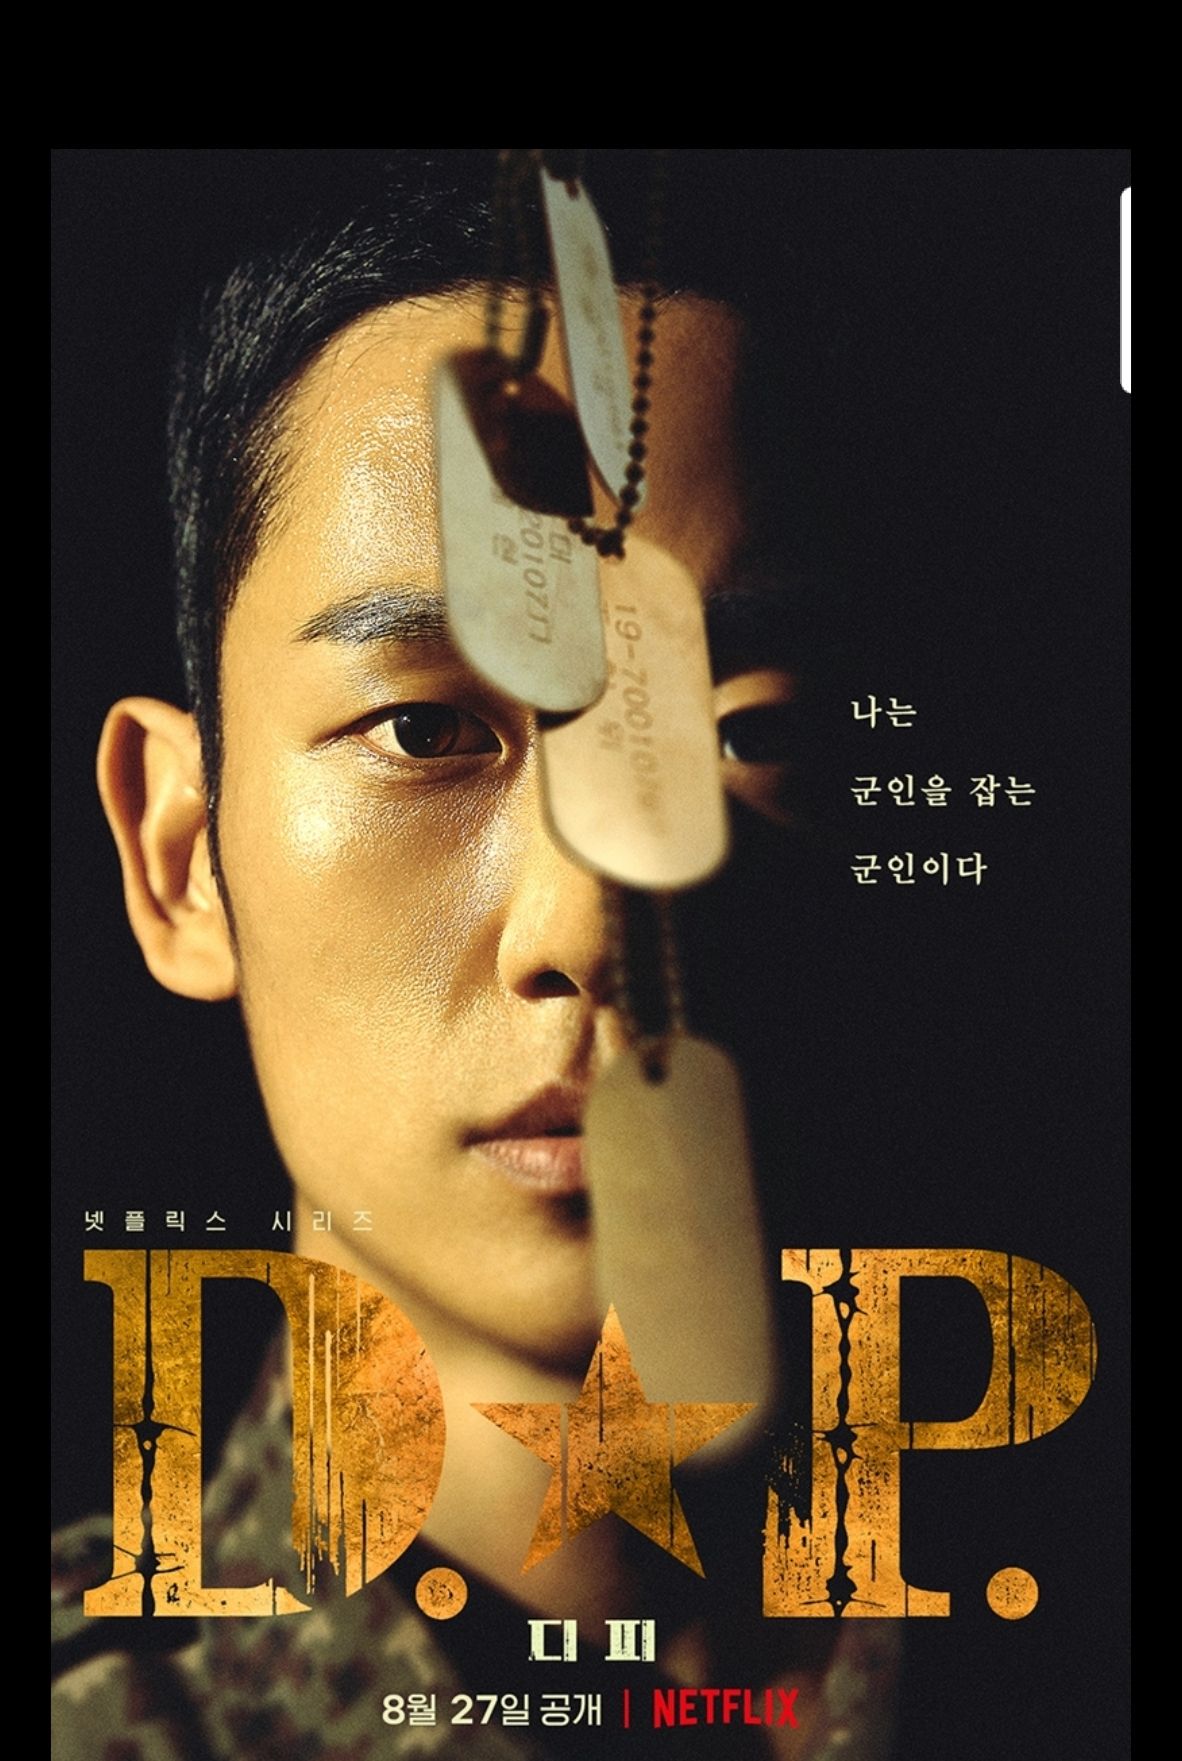 Poster drama Korea D.P (Deserter Pursuit).